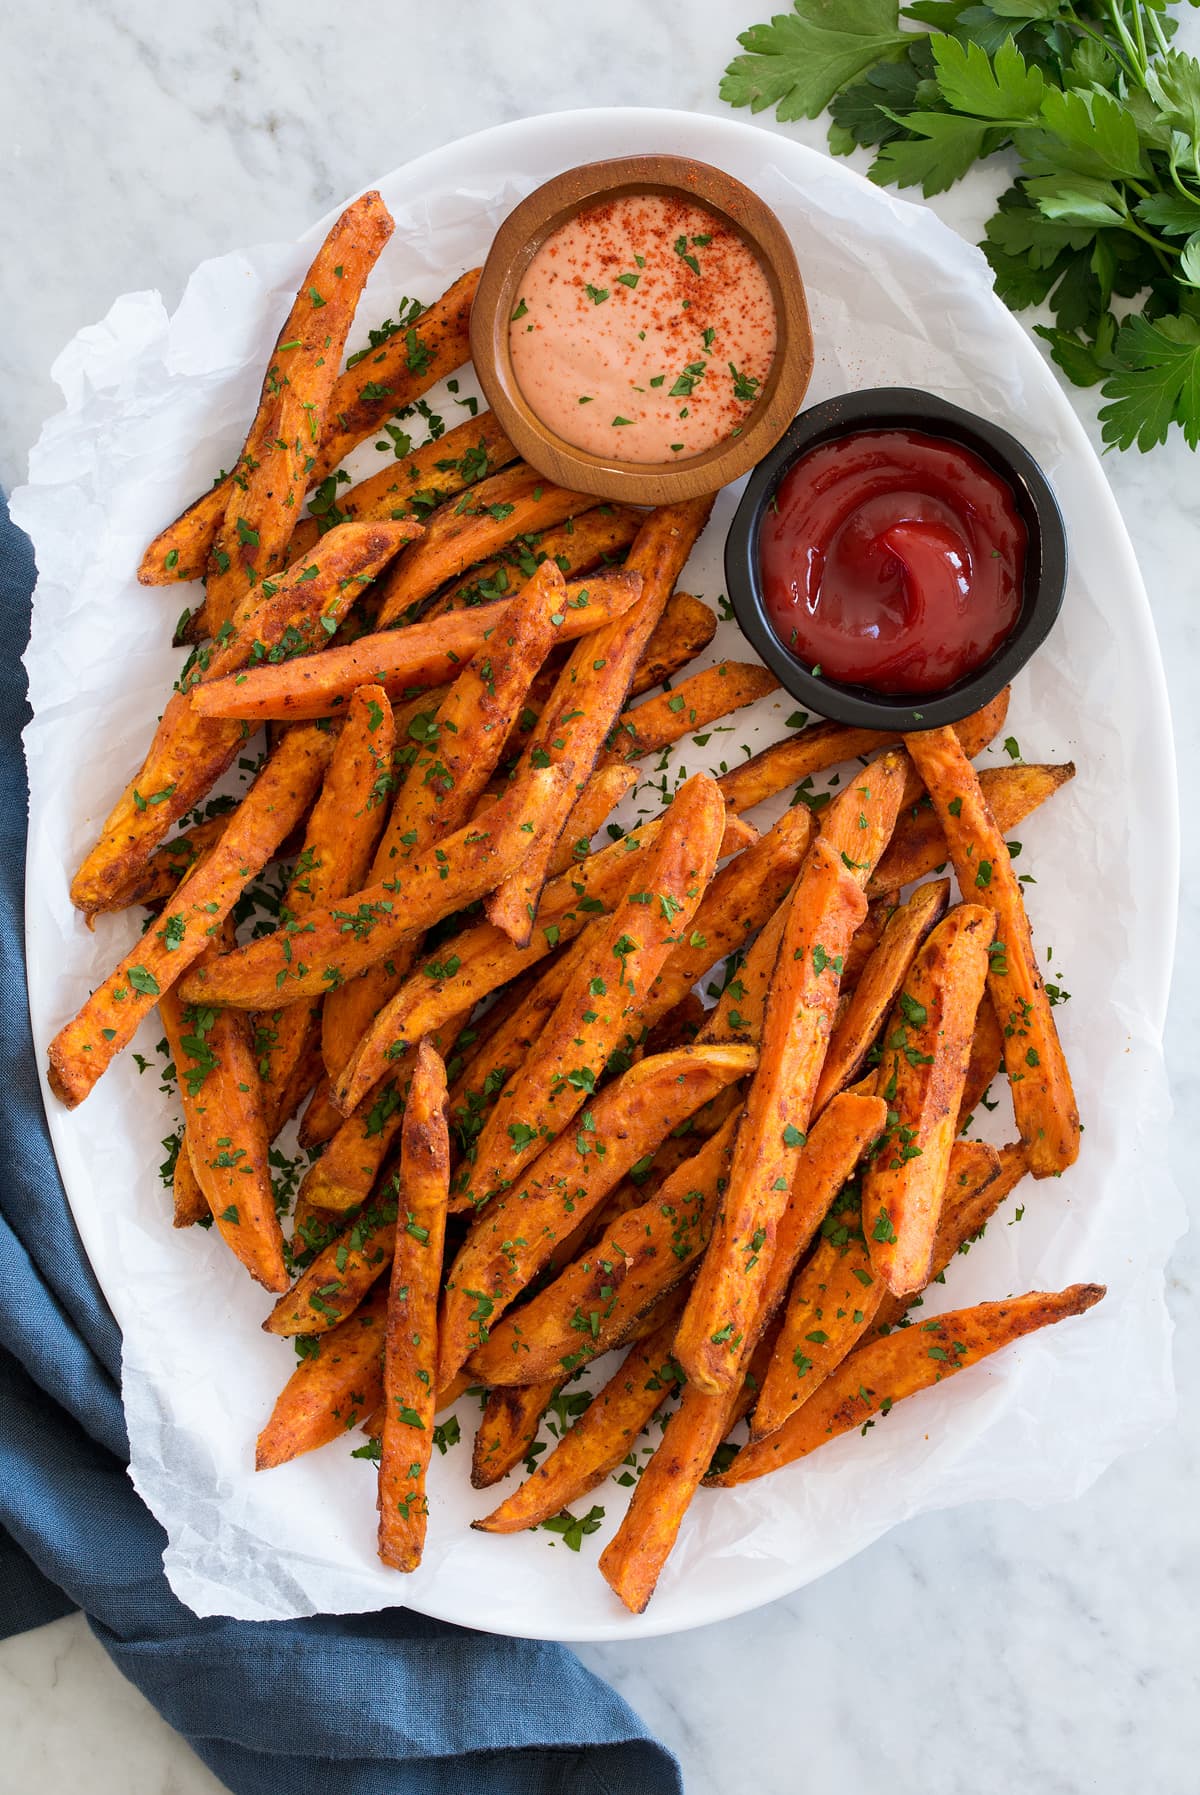 https://www.cookingclassy.com/wp-content/uploads/2021/10/baked-sweet-potato-fries-12.jpg